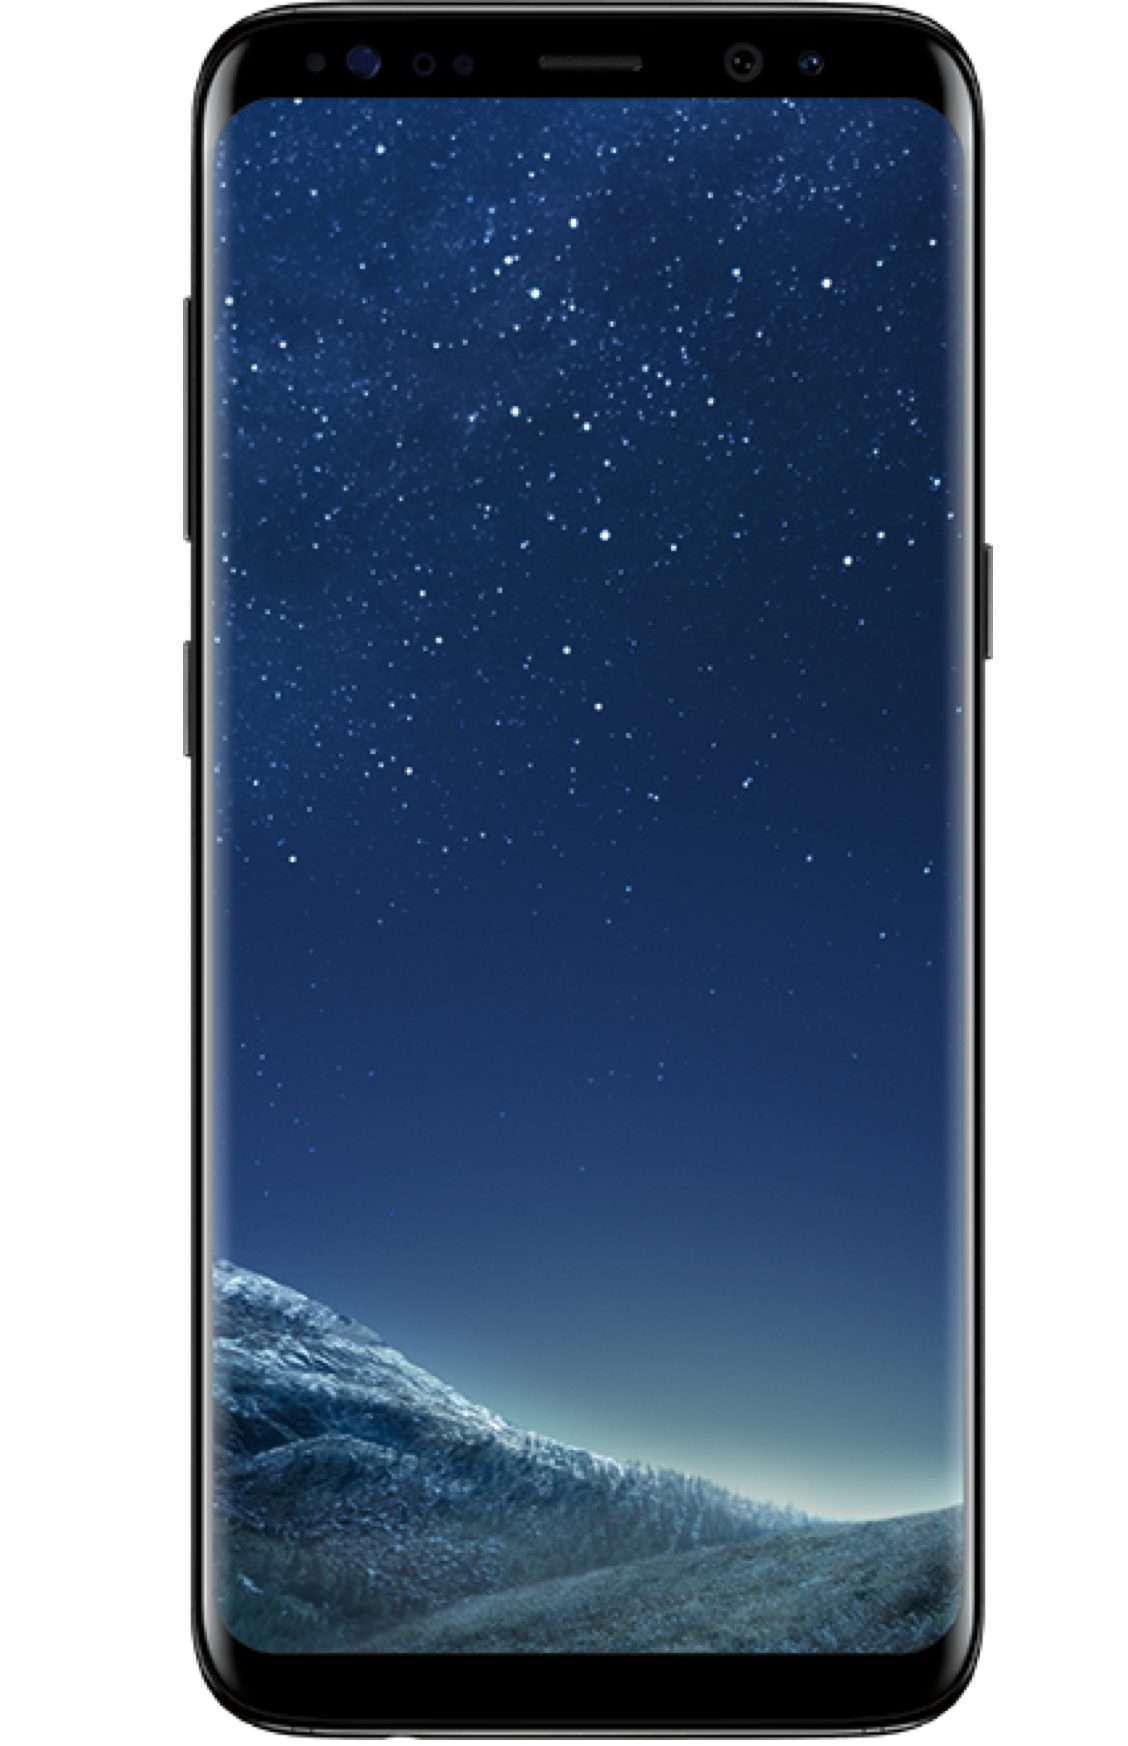 Samsung Galaxy S8 स्मार्टफोन को पाई अपडेट मिलना हुआ शुरू